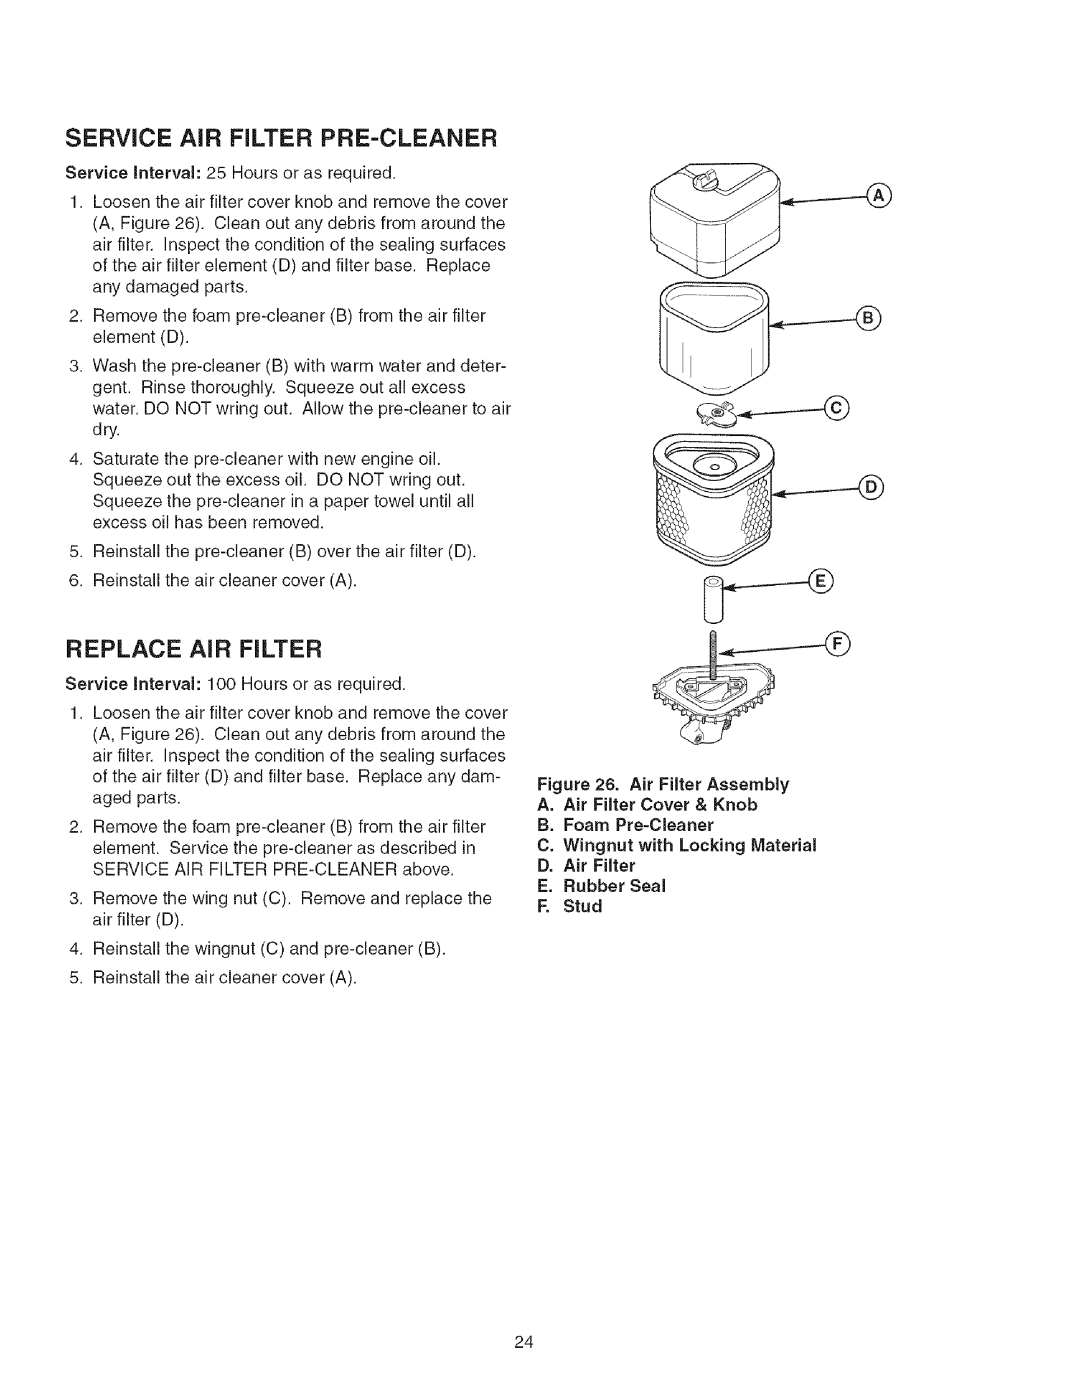 Craftsman 107.2777 manual SERVICE AiR FILTER PRE-CLEANER, Replace Air Filter, A.Air Filter Cover & Knob B.Foam Pre-Cleaner 